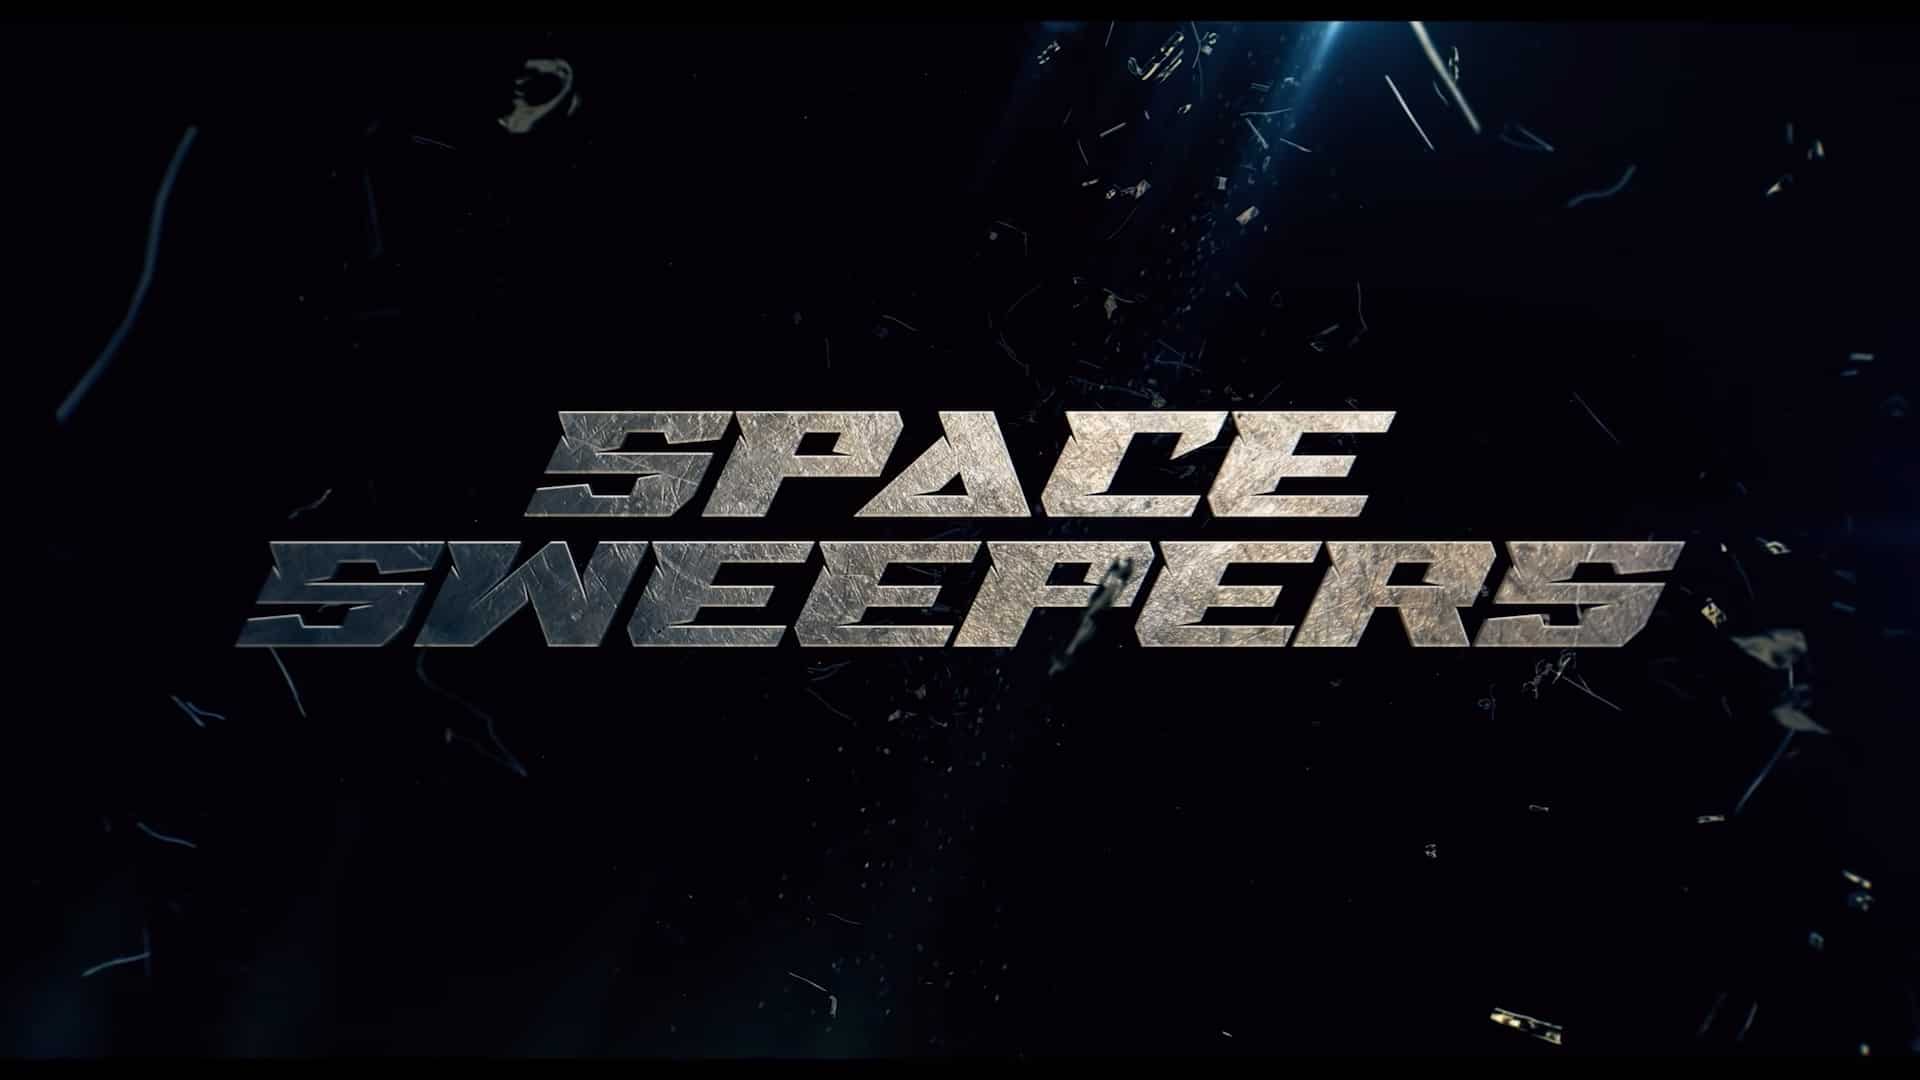 Netflix Space Sweepers Trailer, Netflix Action Adventure, Netflix Drama Movies, Netflix Sci Fi, Netflix Movie Posters Space Sweepers, Coming to Netflix in February 2021